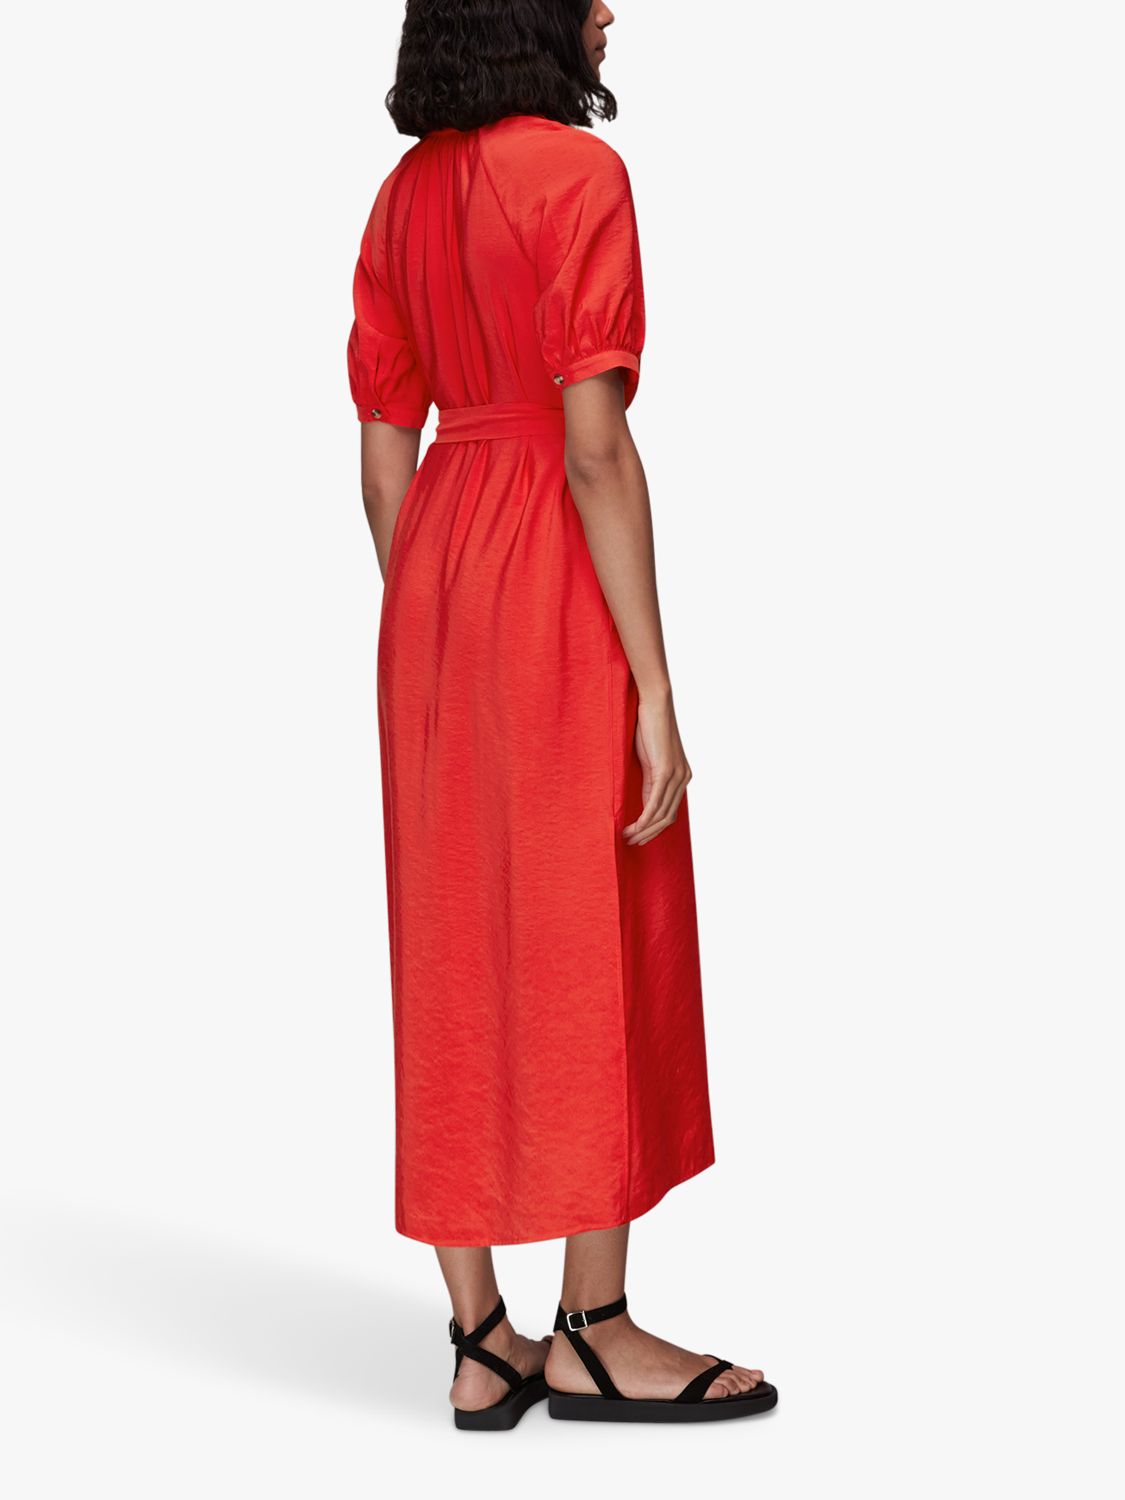 Whistles Olivia Midi Dress, Red, 6